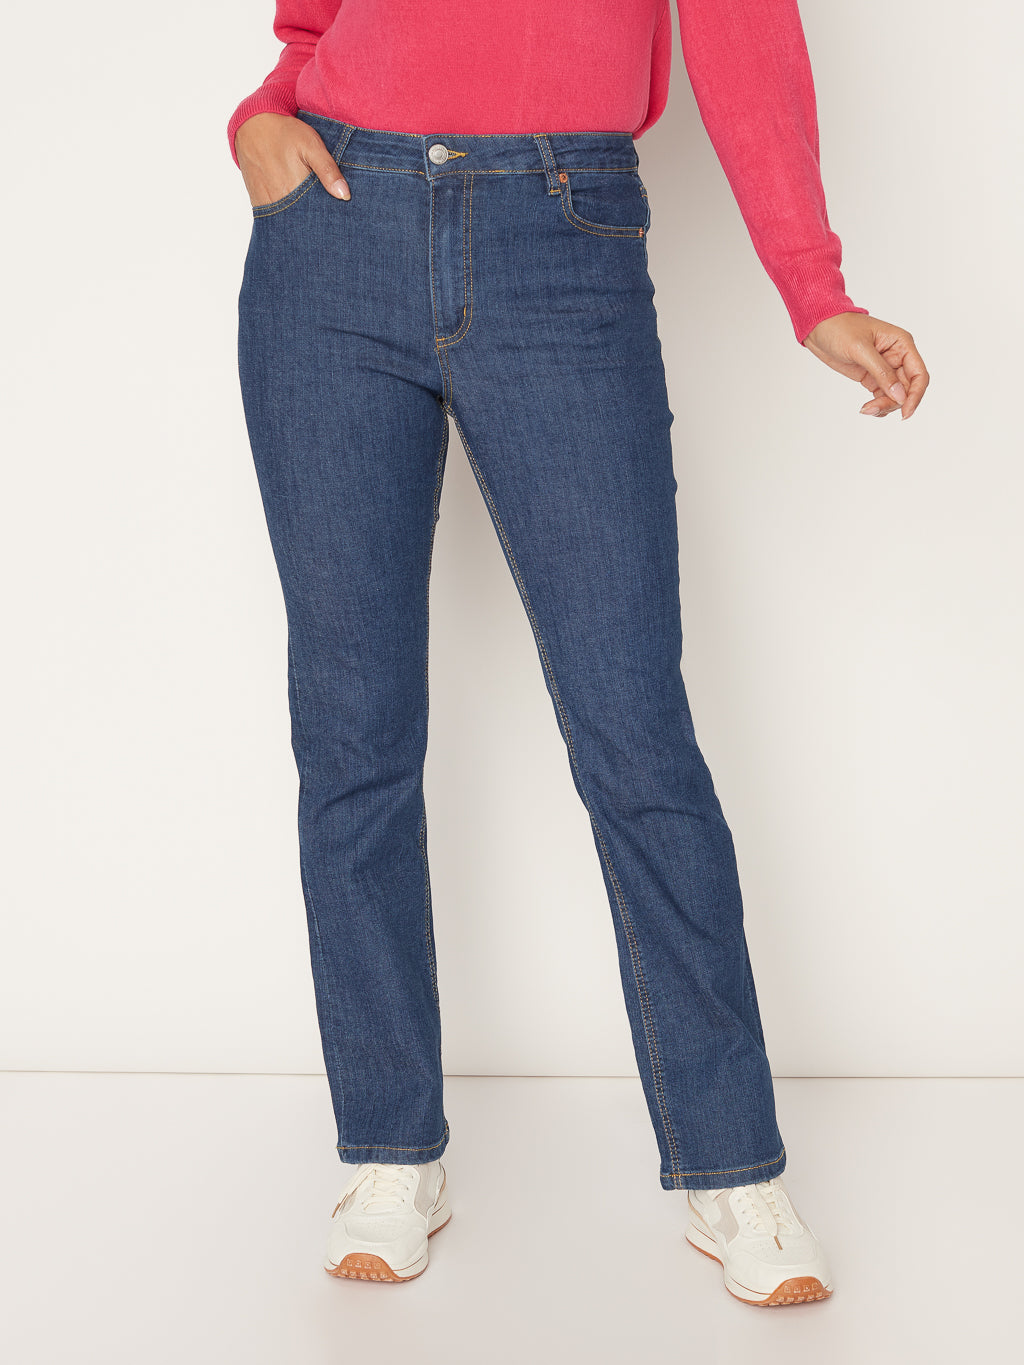 Semi-flared semi-fitted jean